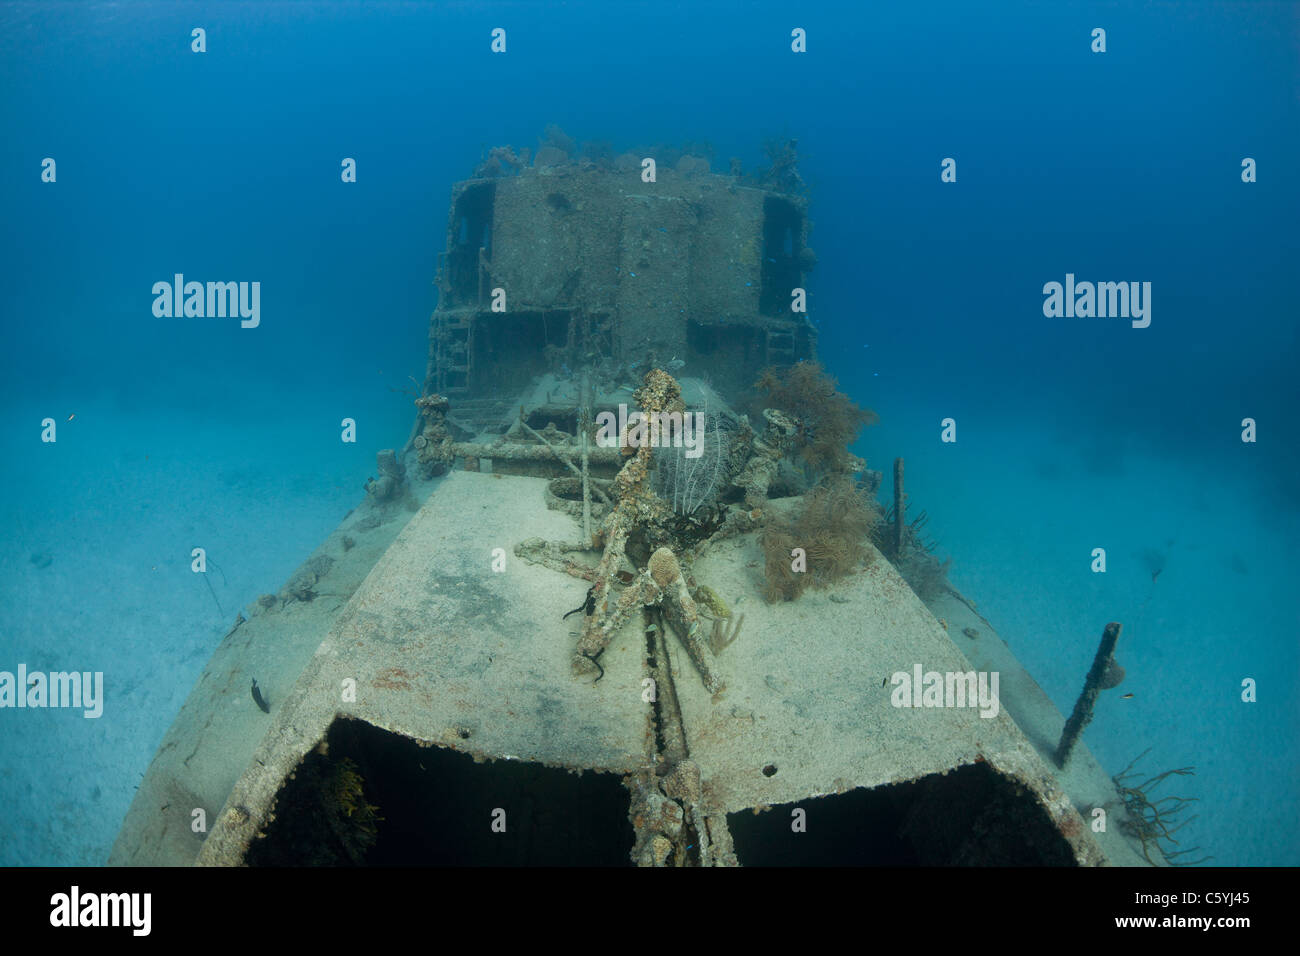 The Prince Albert wreck off the island of Roatan, Honduras. Stock Photo